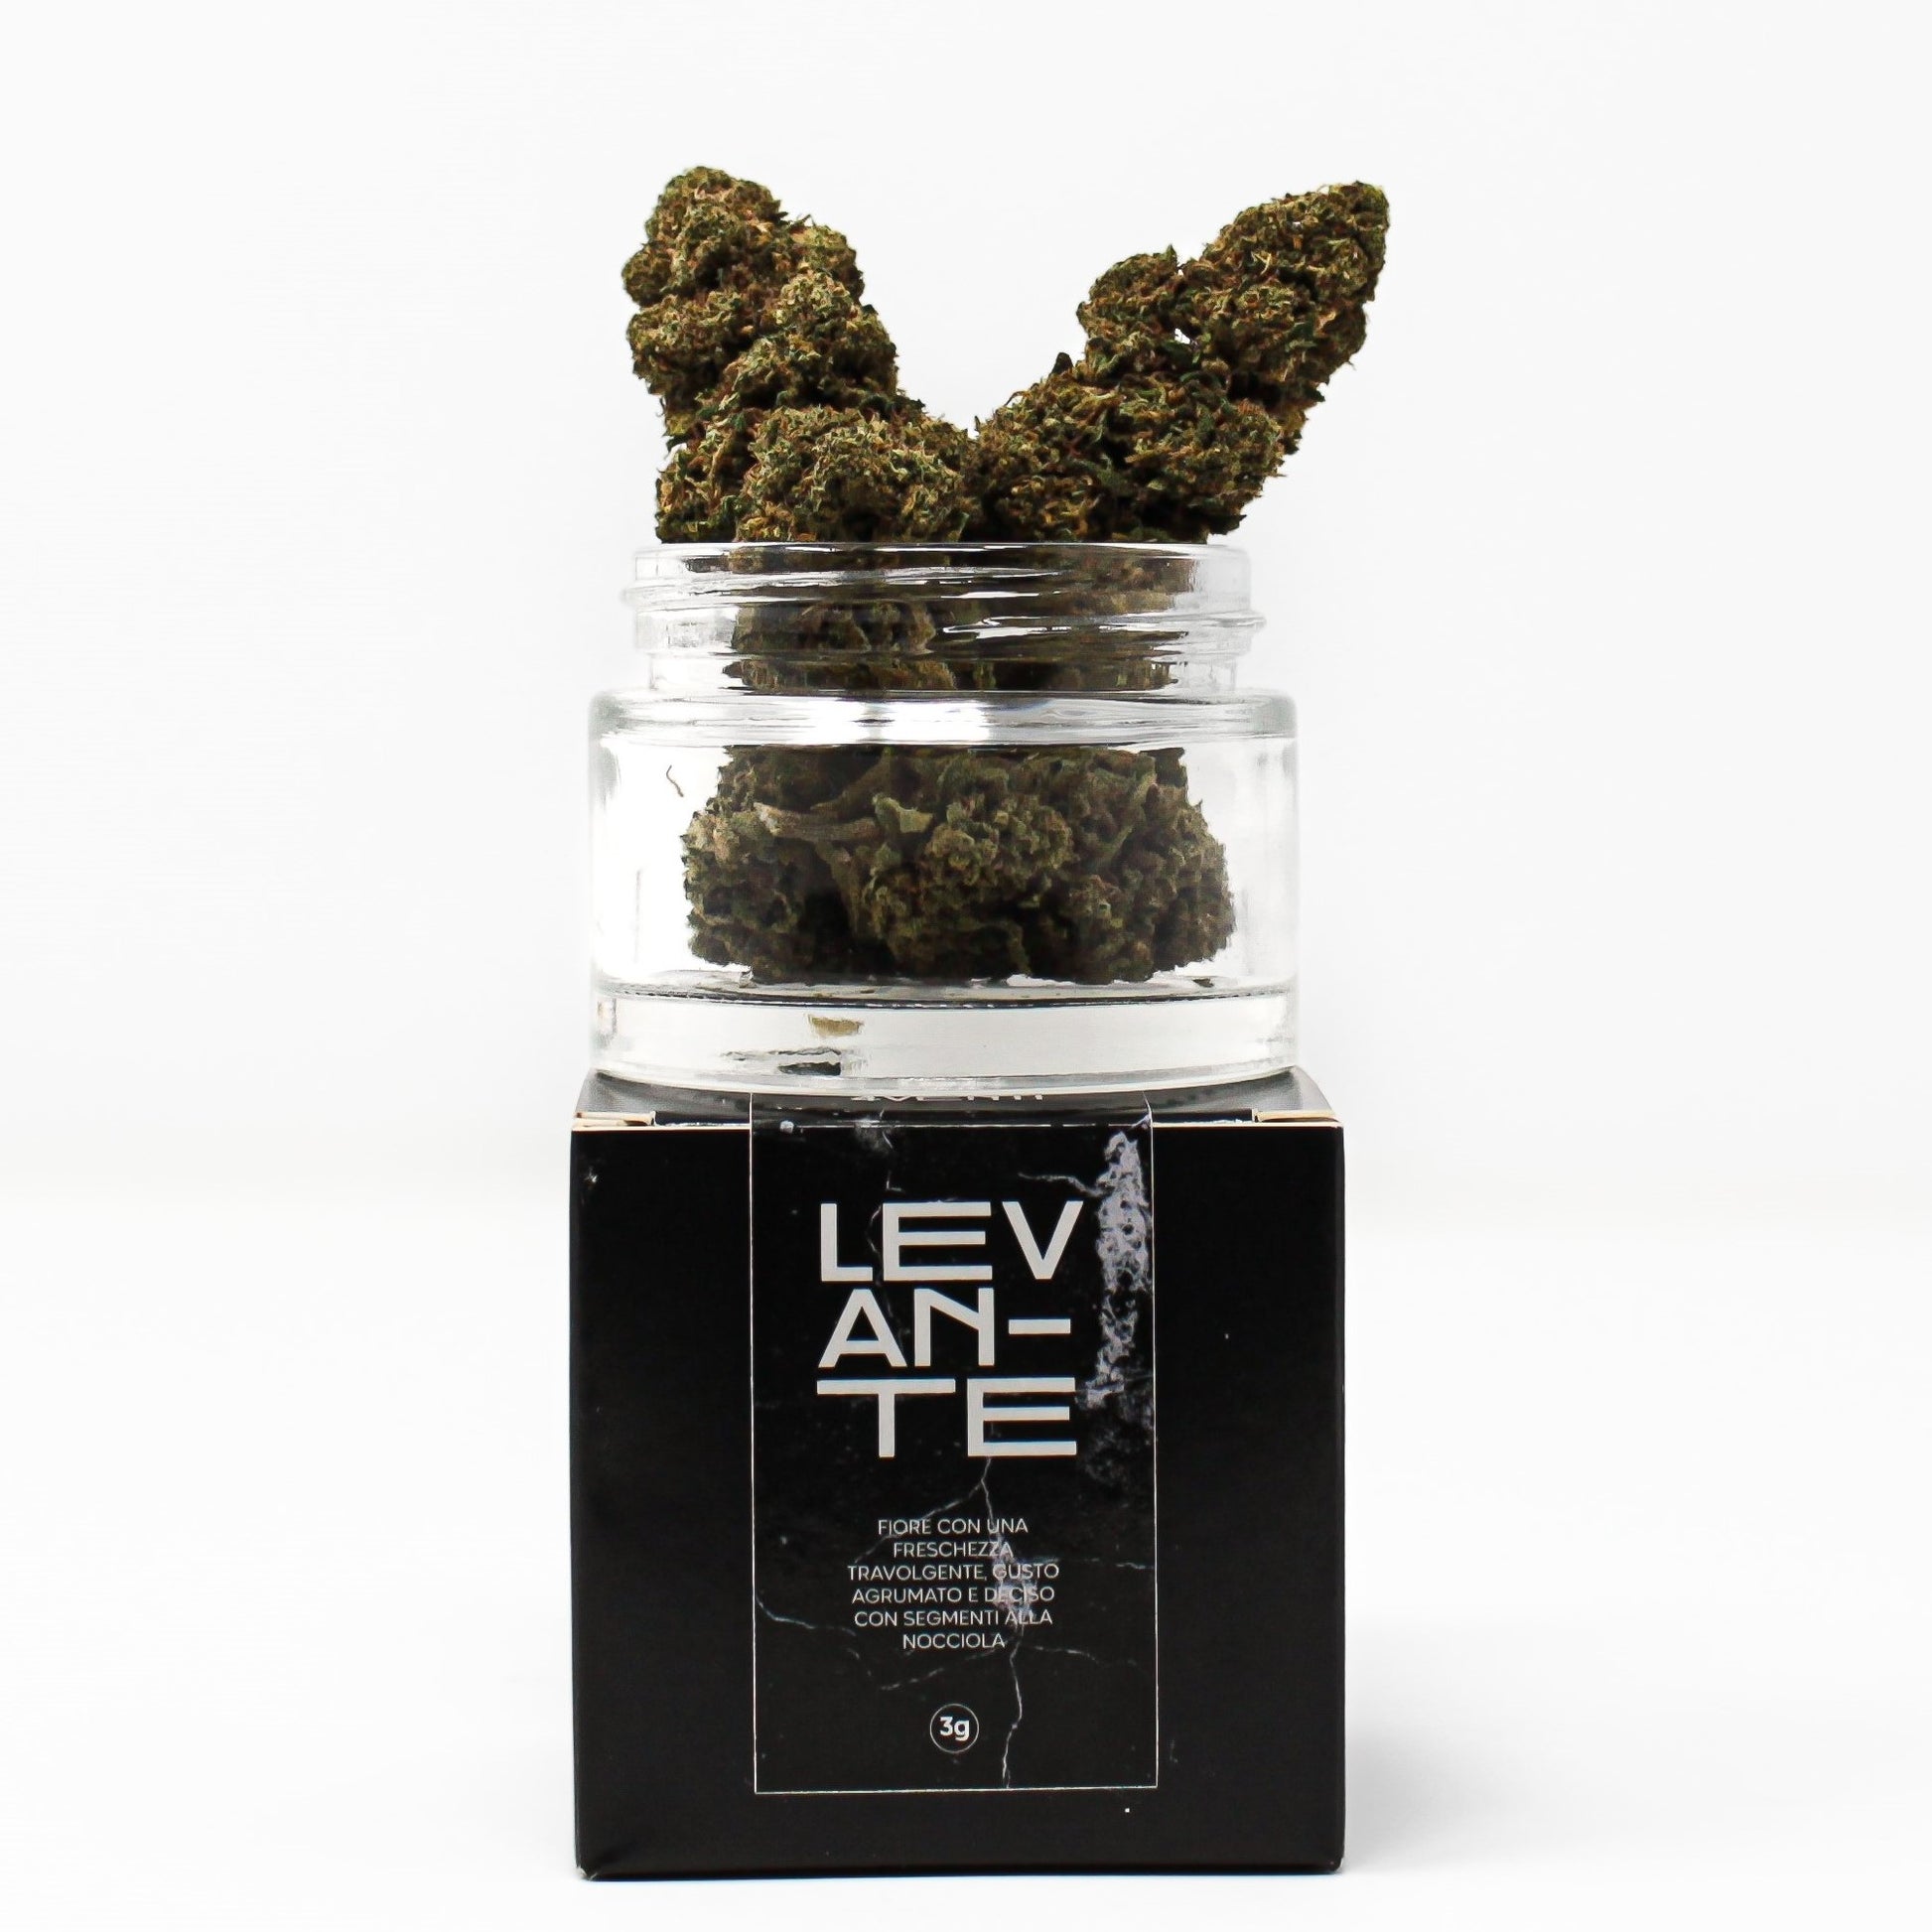 Levante cannabis light